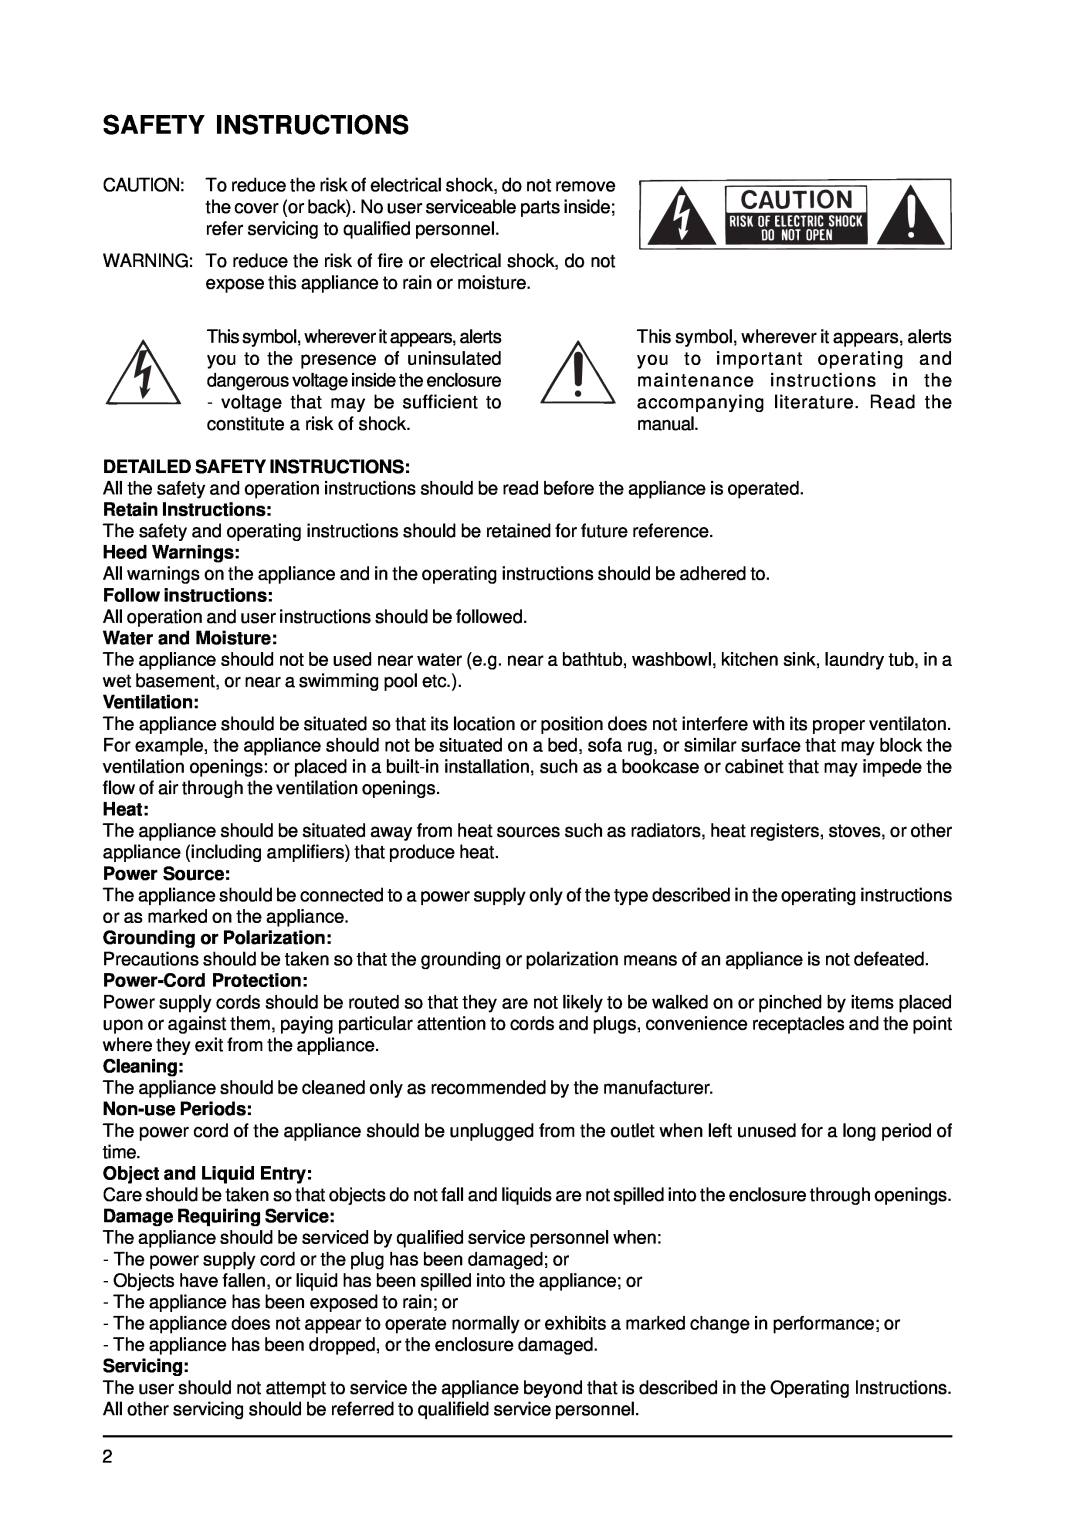 Behringer MX9000 user manual Safety Instructions 